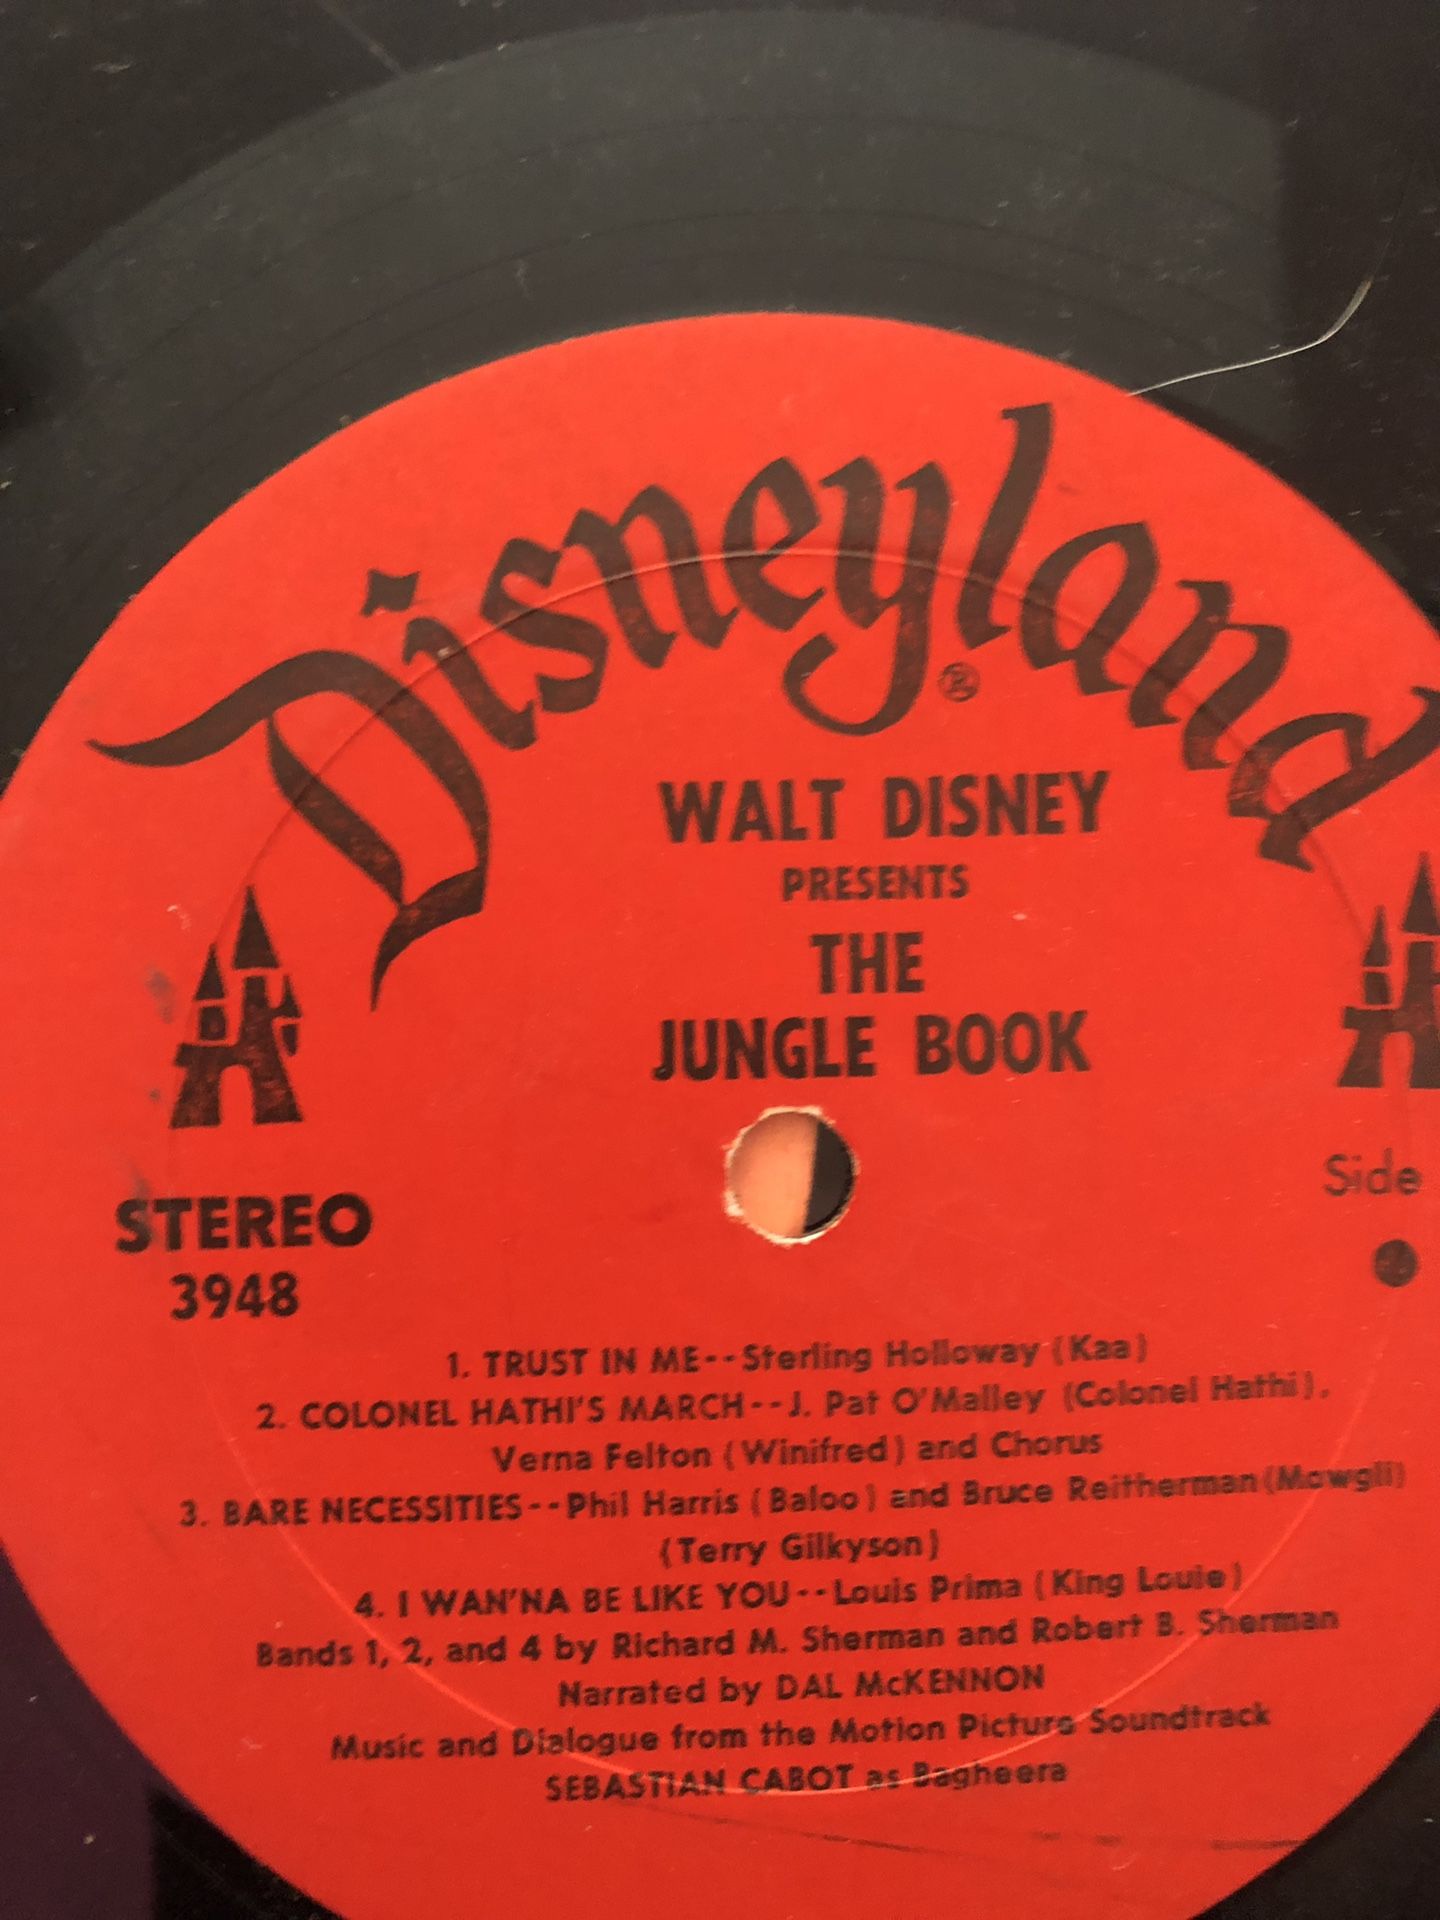 Storybook record Disney